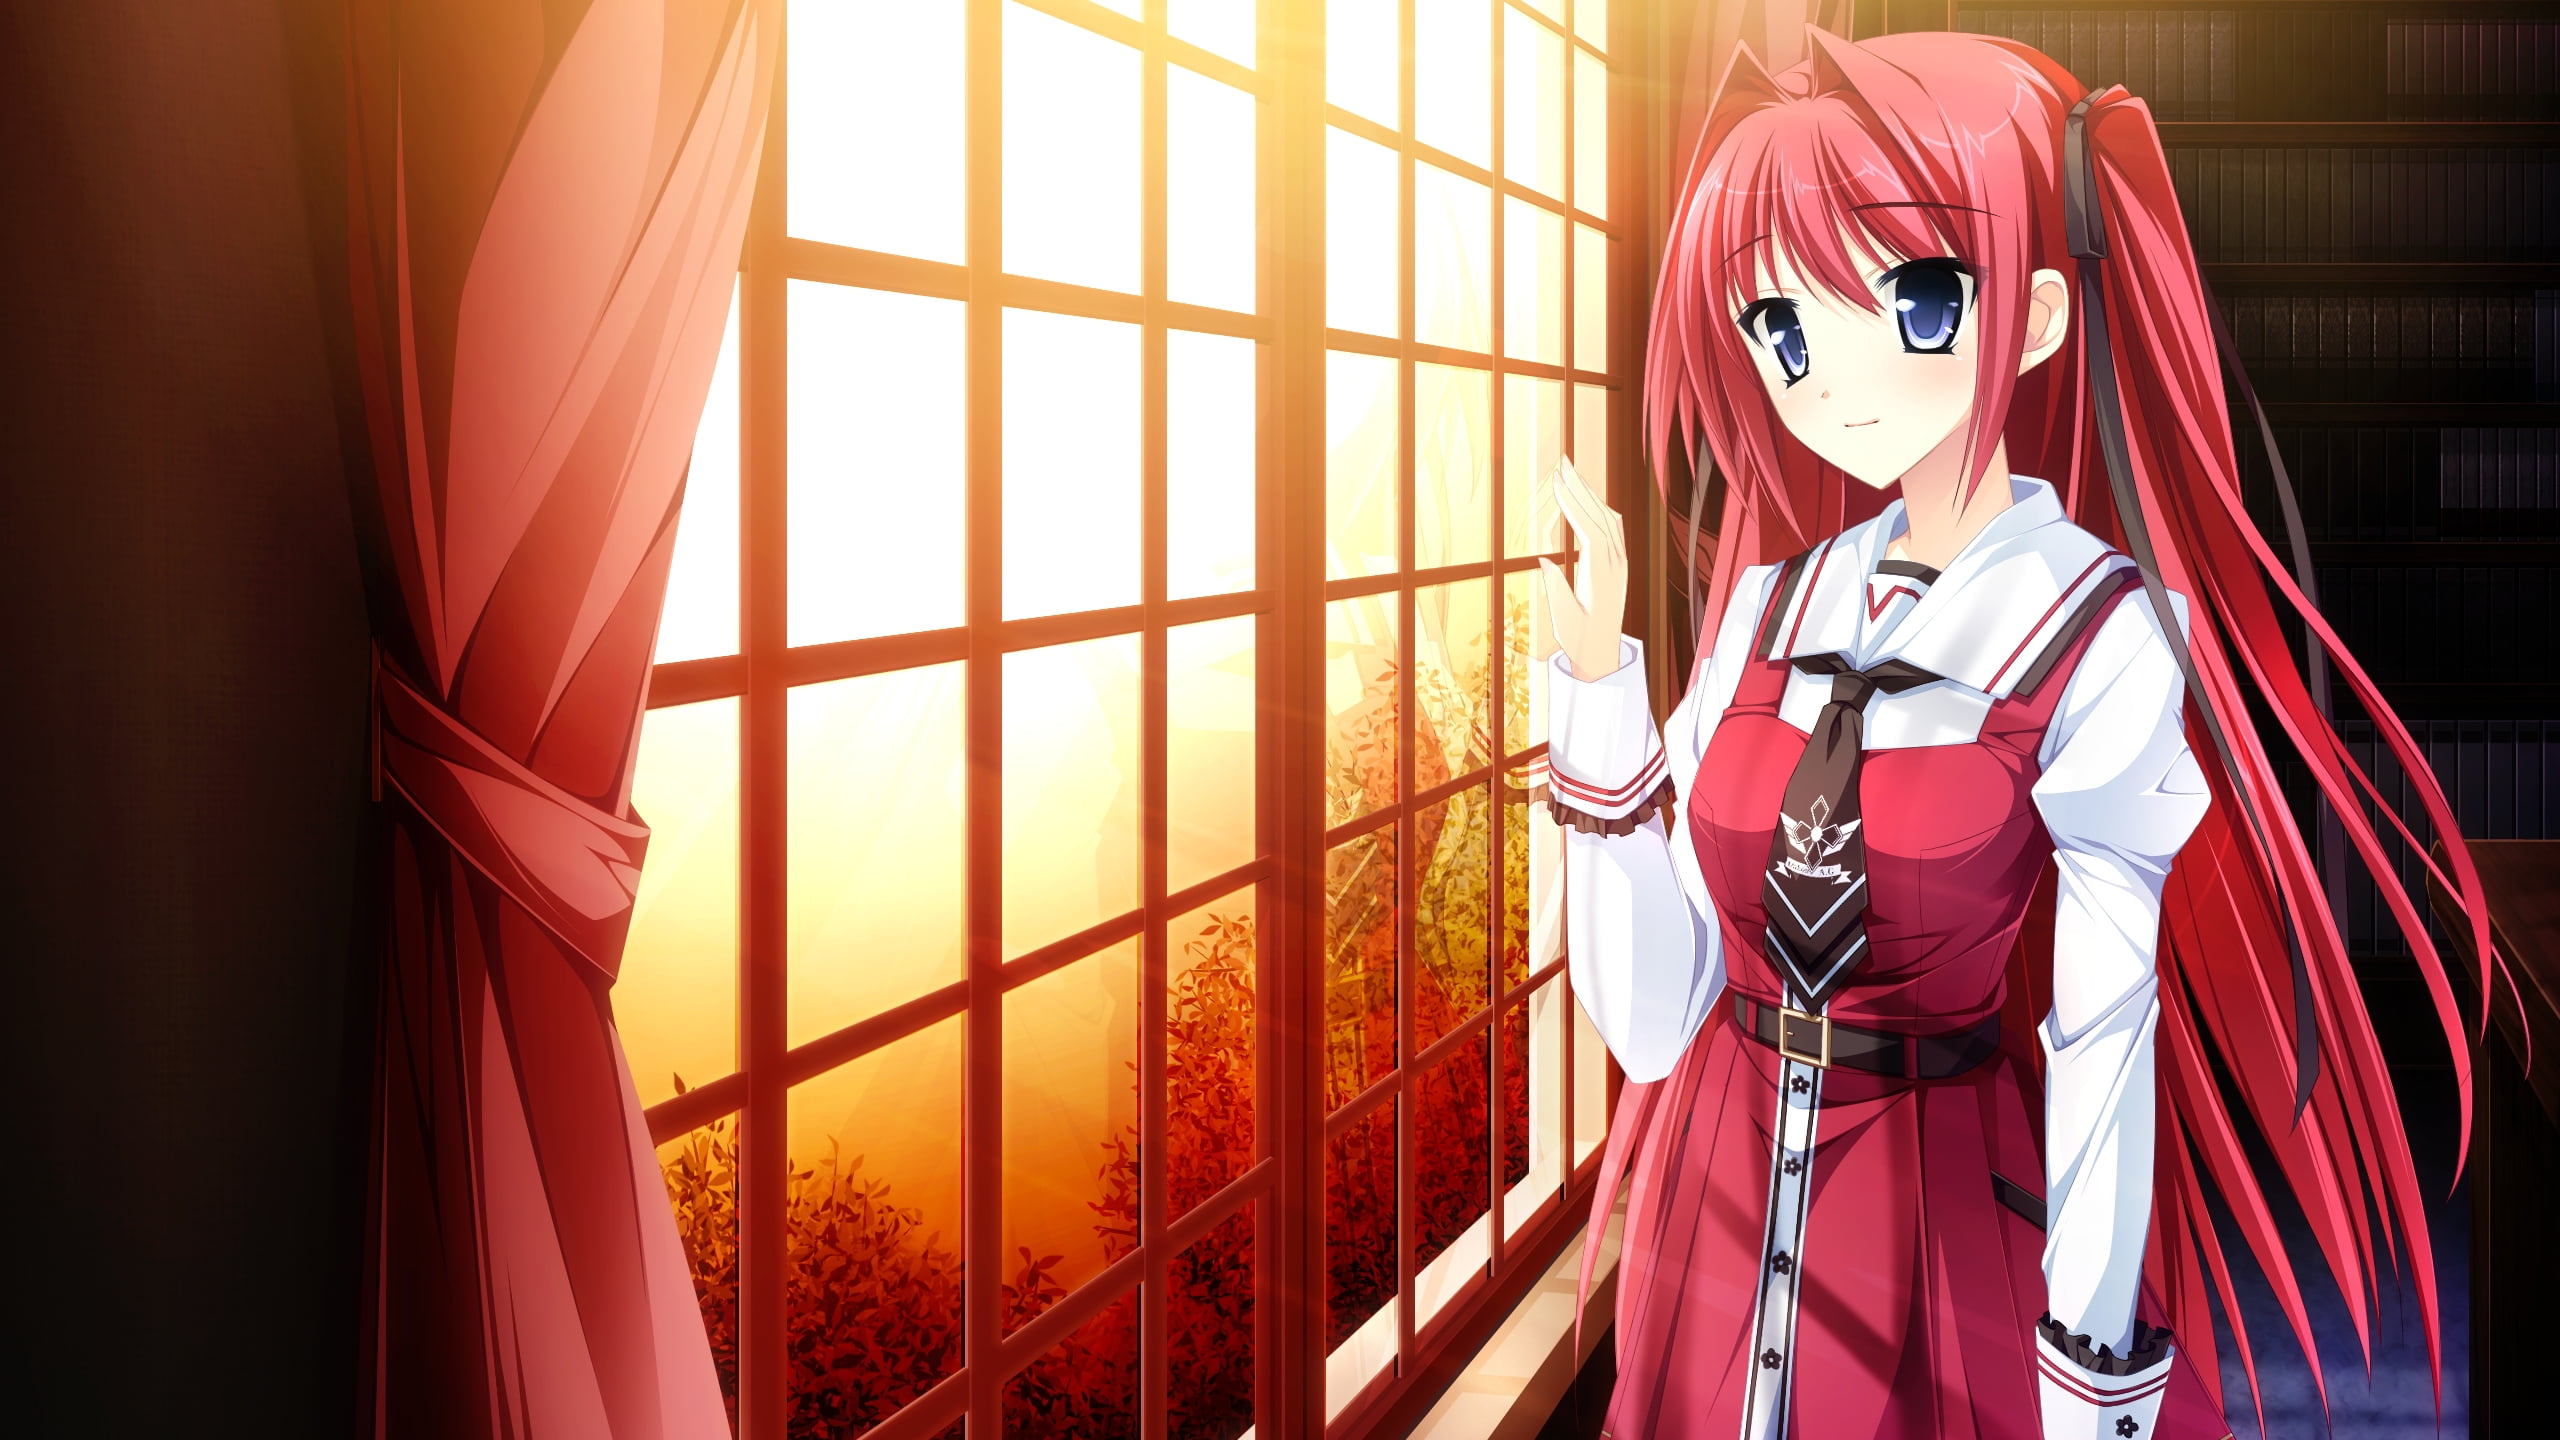 Girl anime character near window illustration HD wallpaper | Wallpaper ...